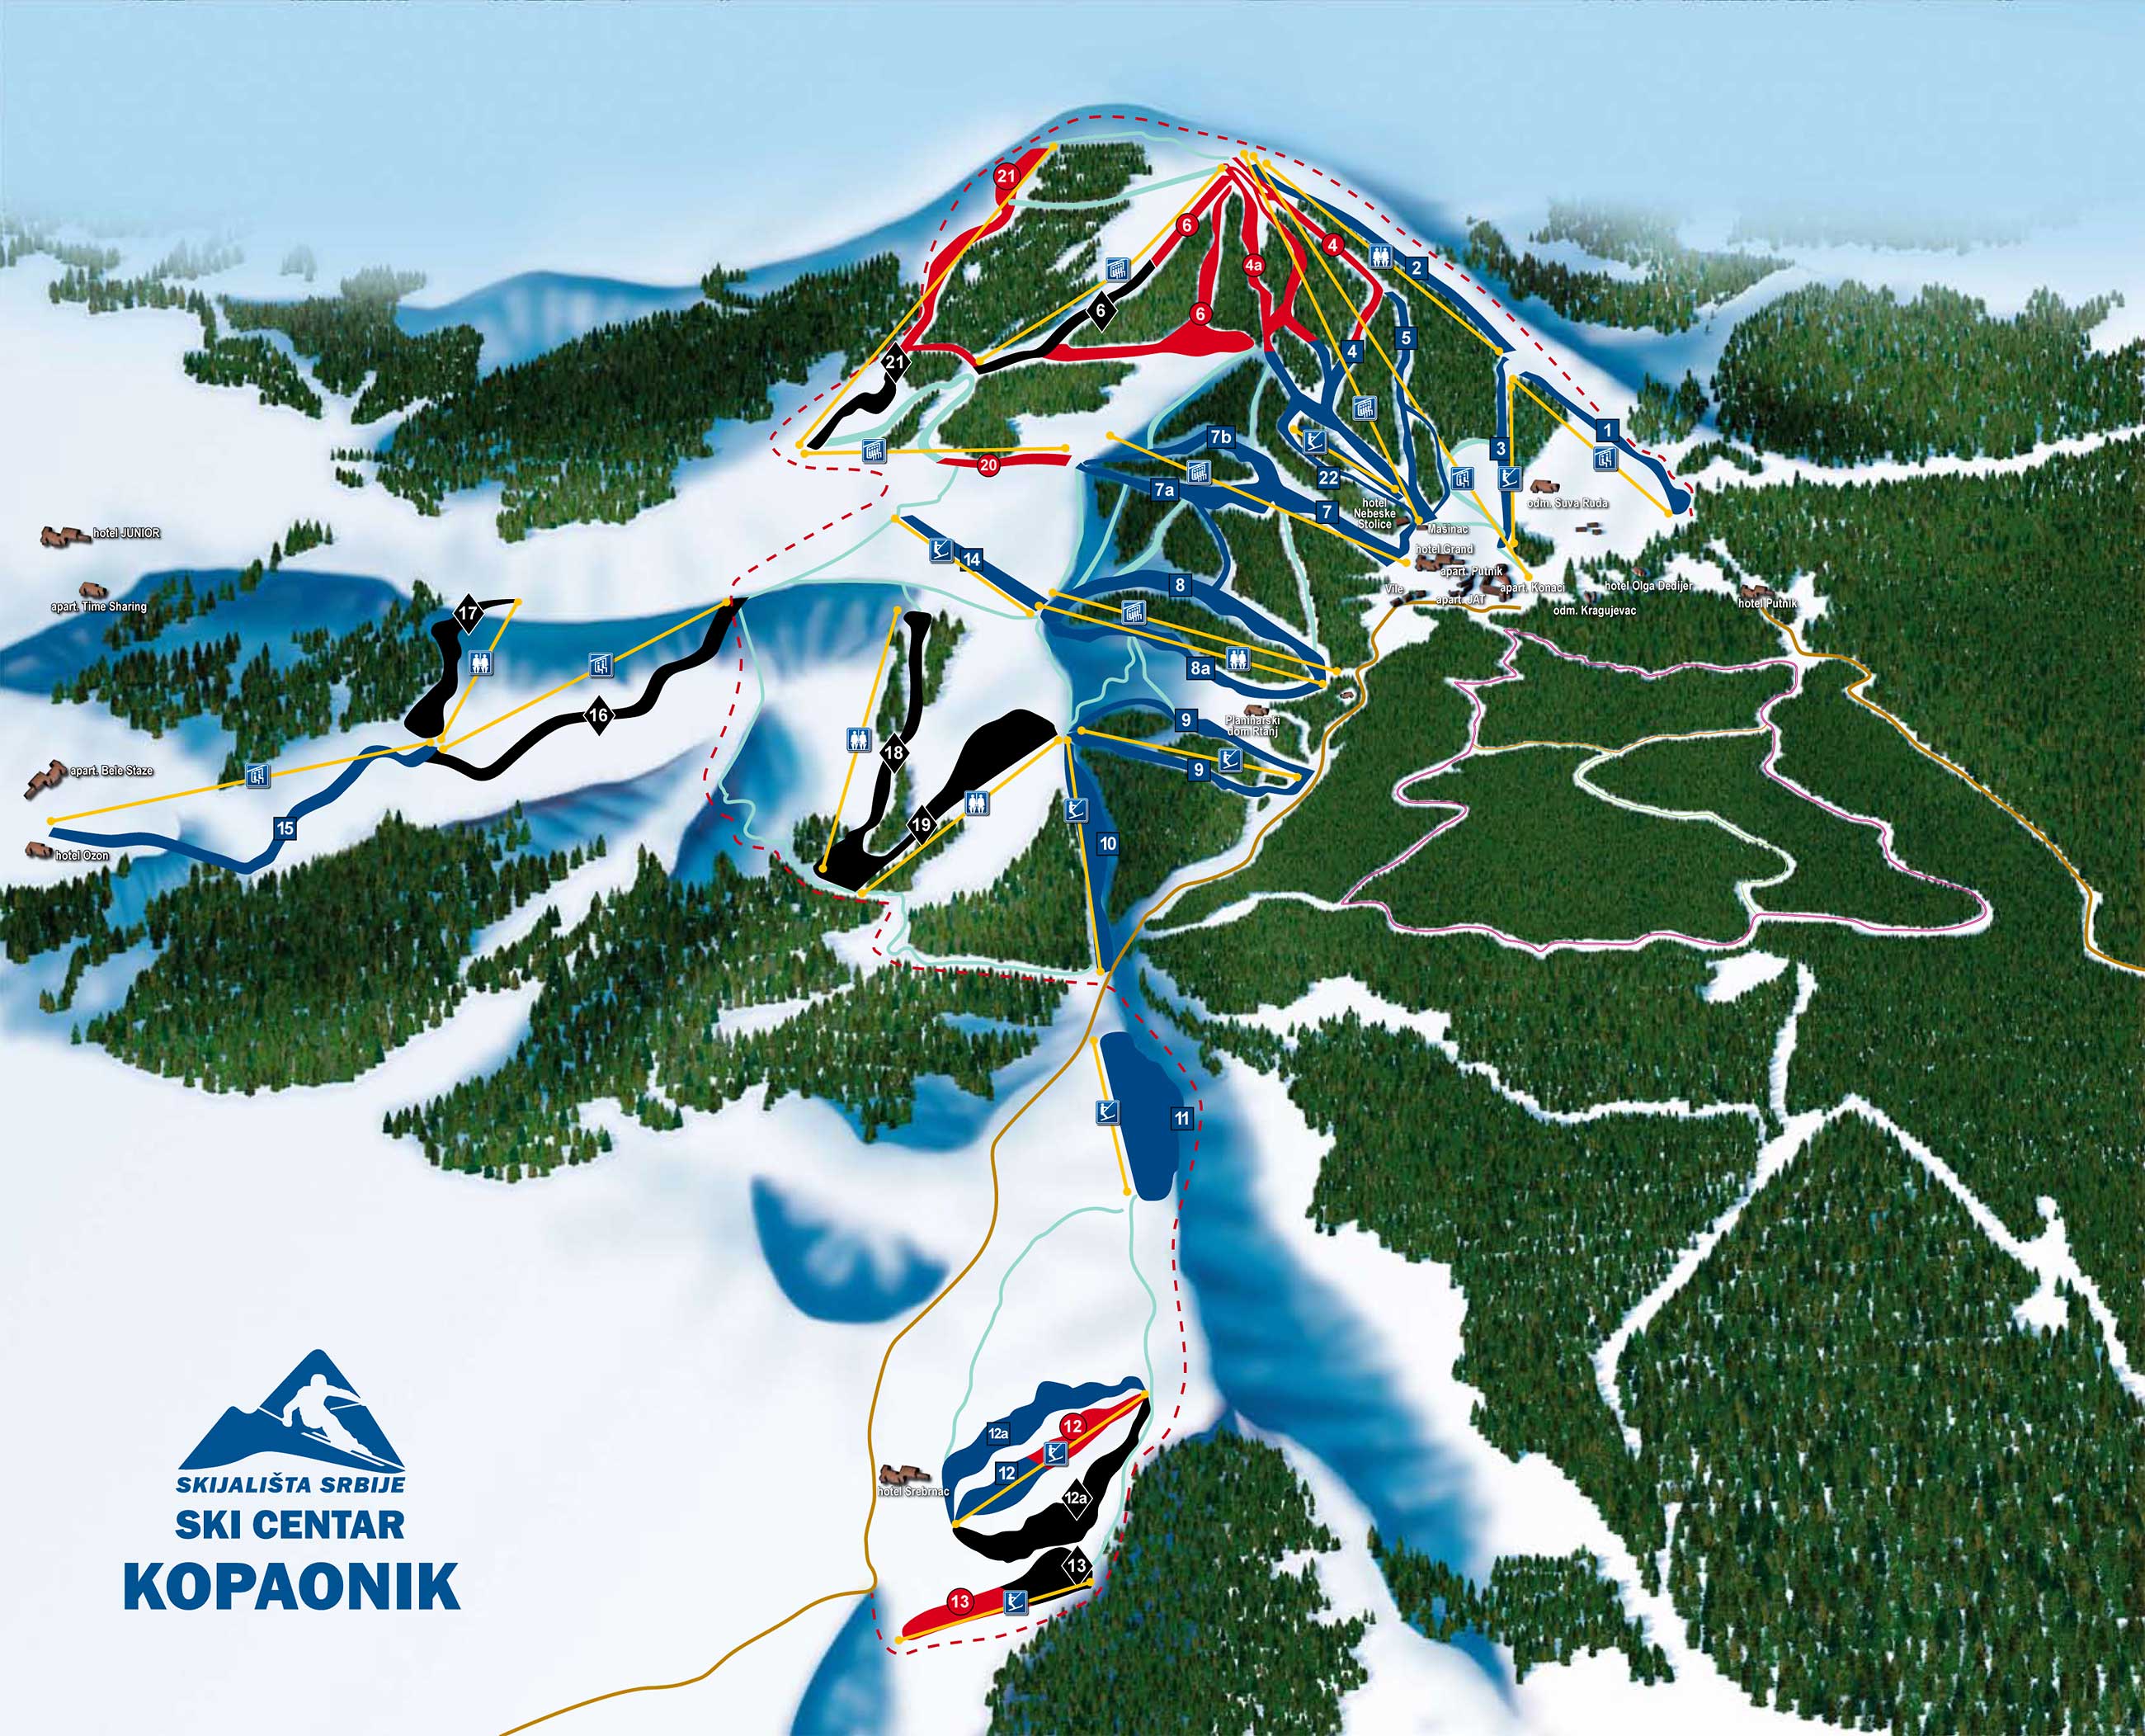 kopaonik mapa Kopaonik   SkiMap.org kopaonik mapa